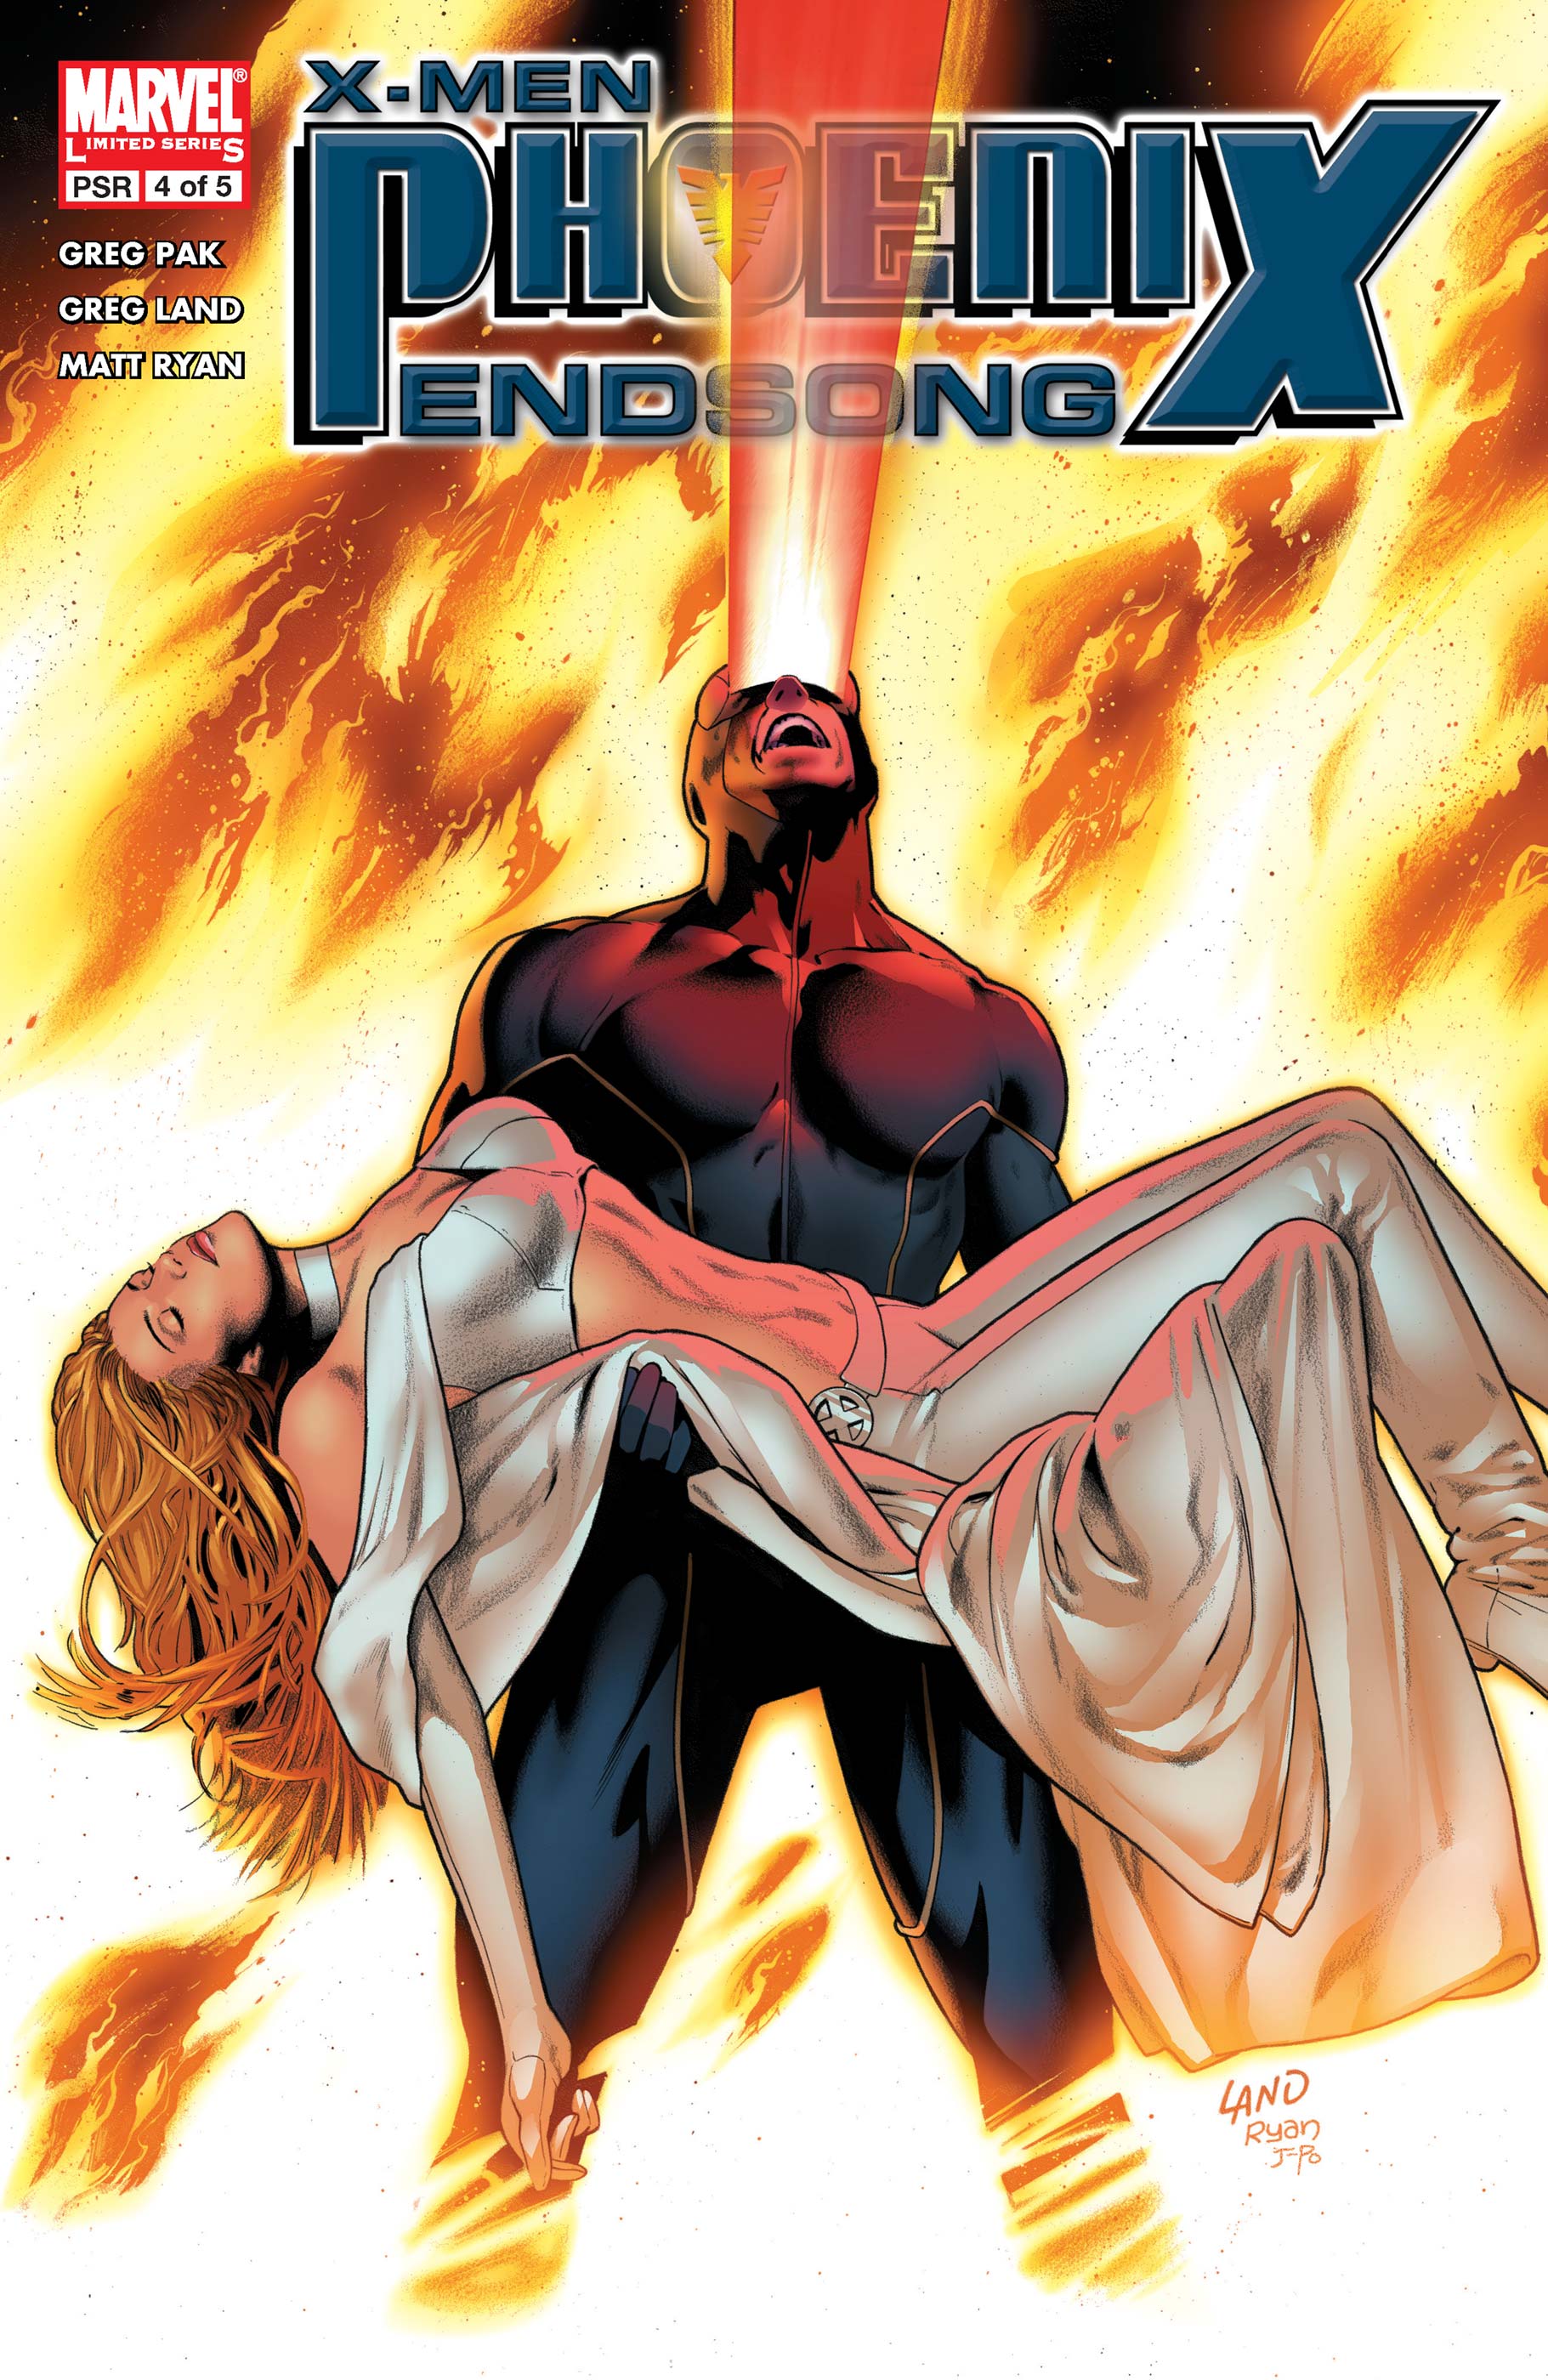 X-Men: Phoenix - Endsong (2005) #4